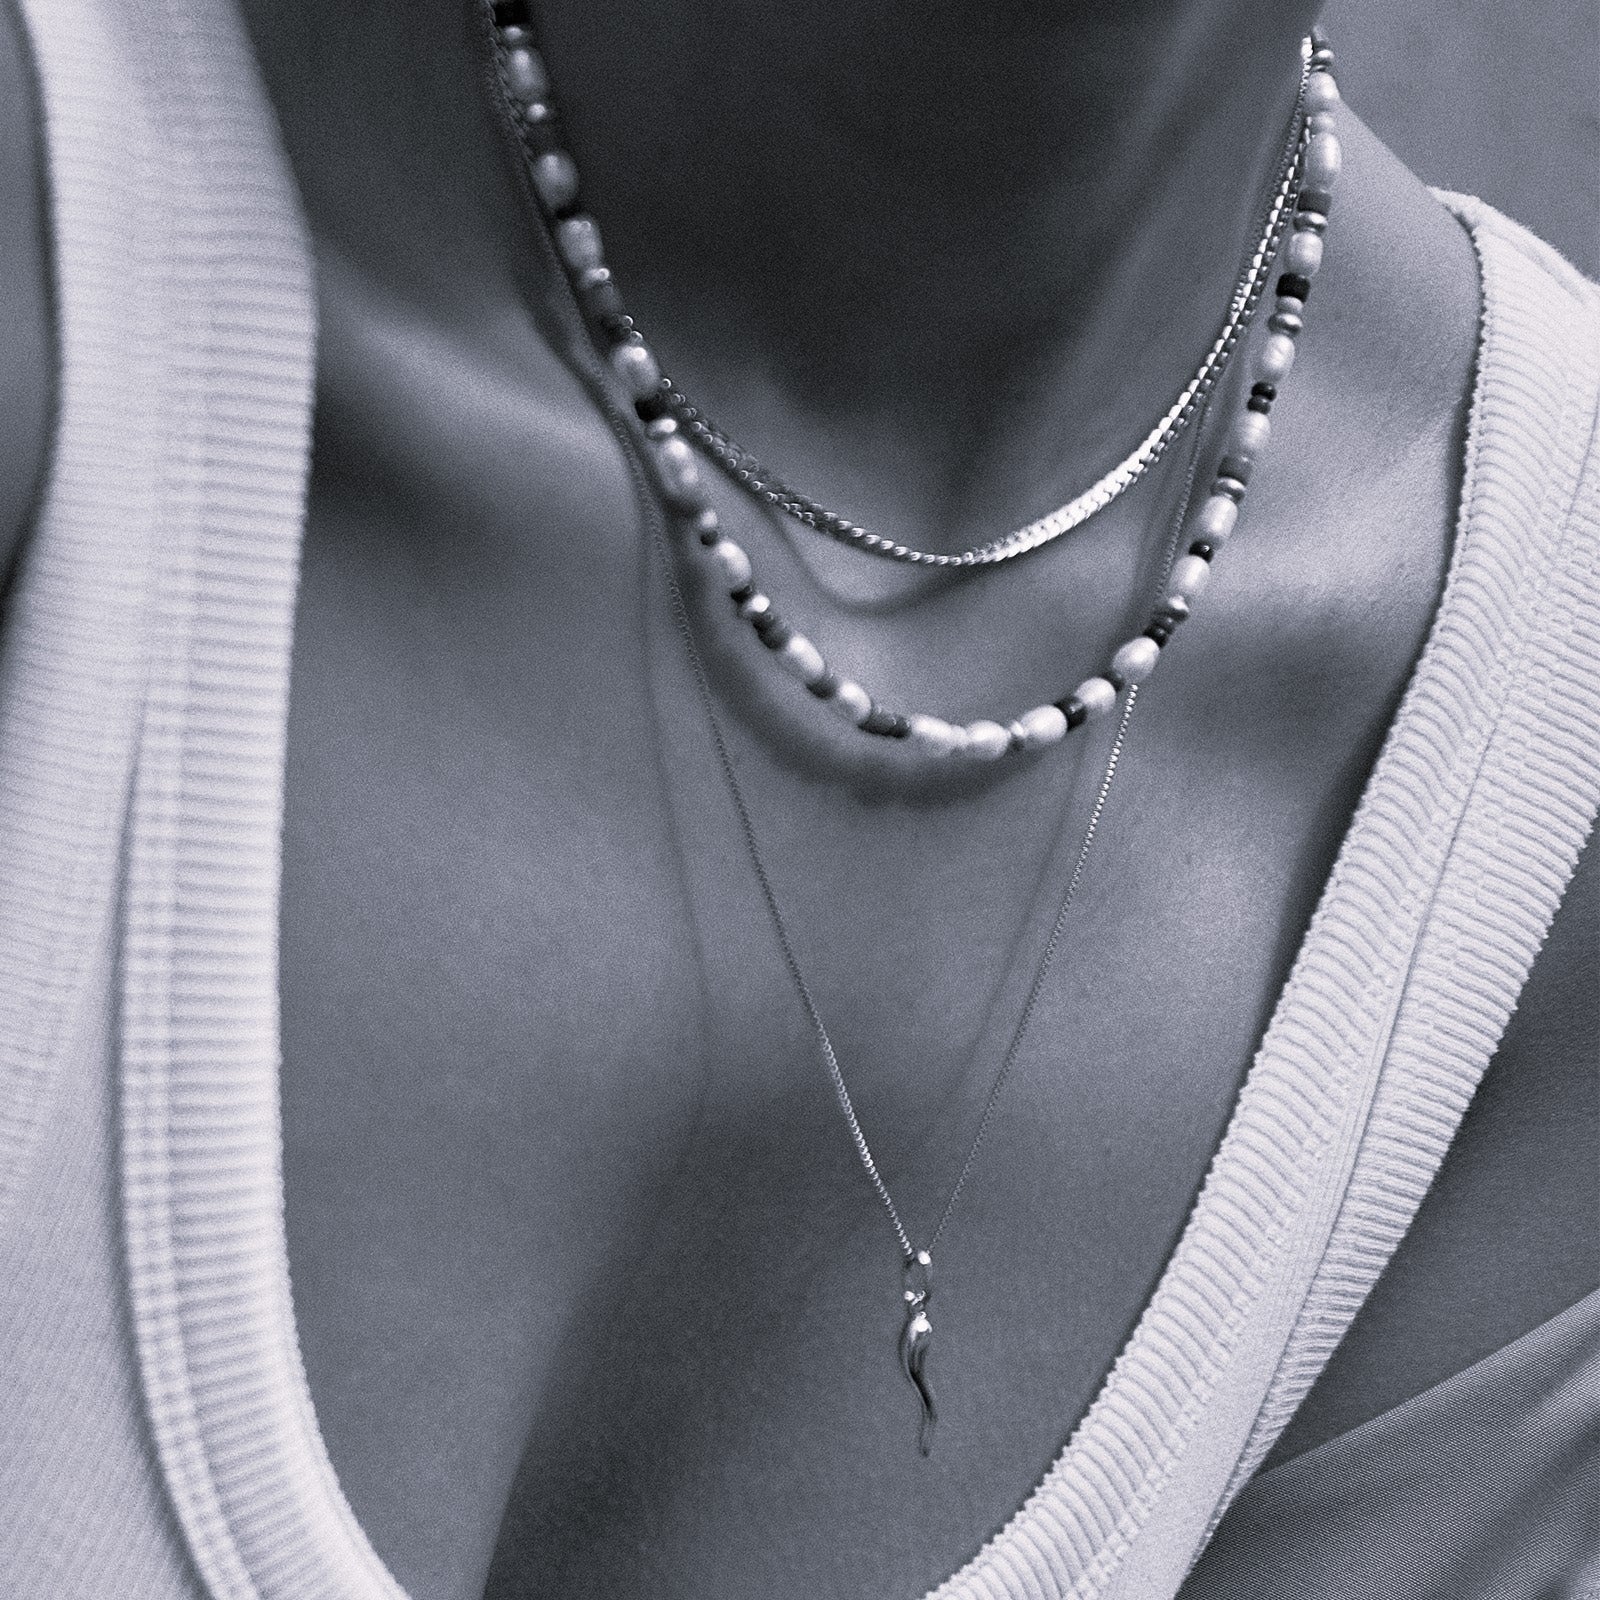 Cornicello Charm Necklace - Silver